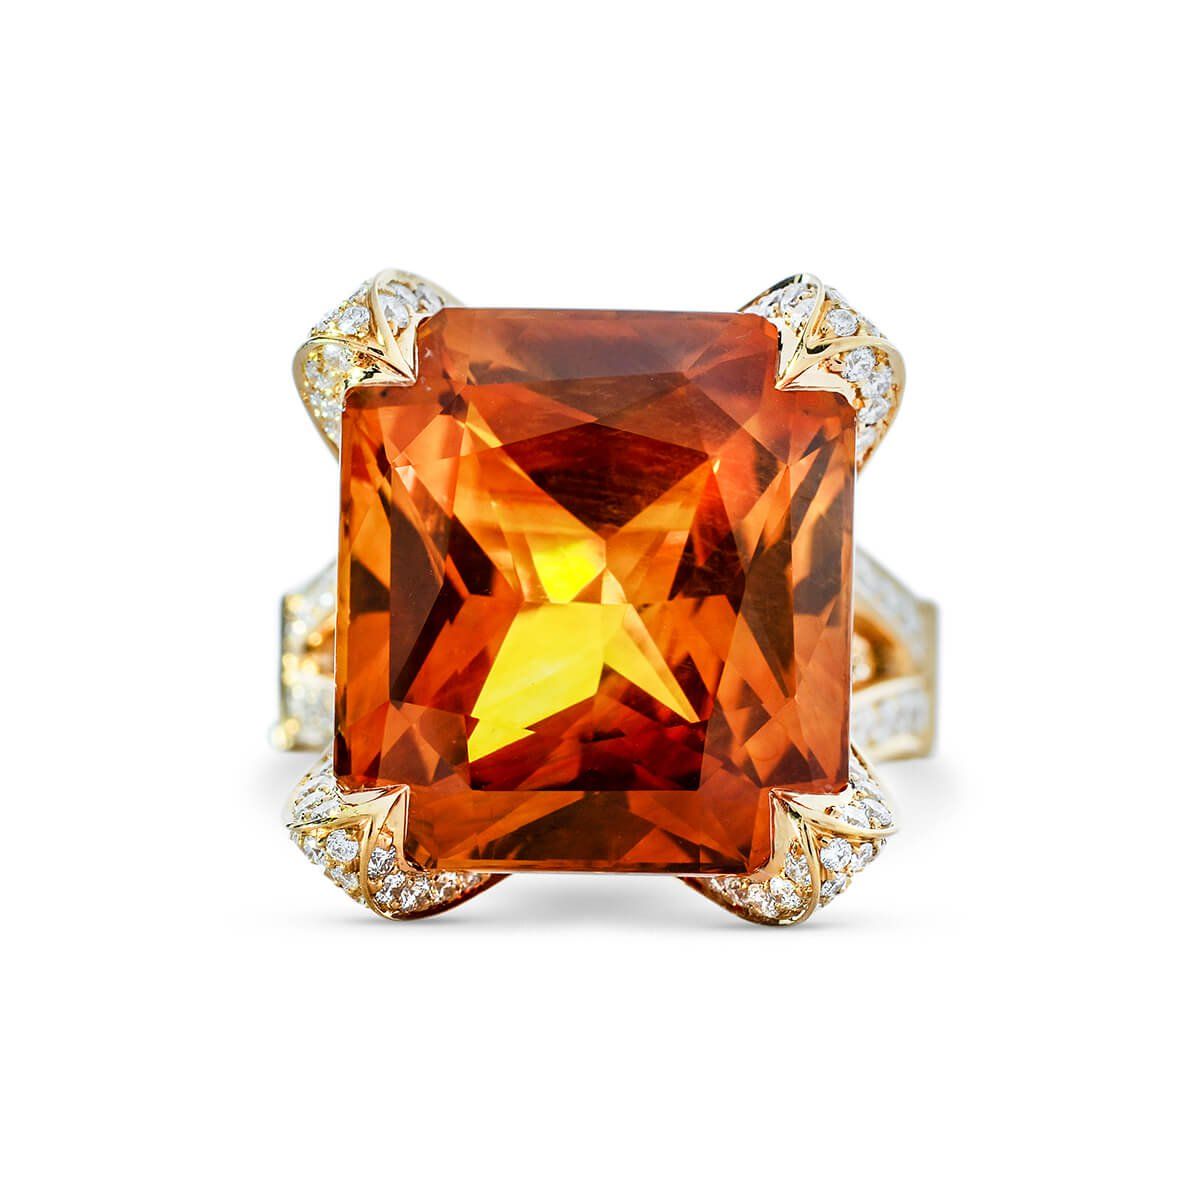 Natural V.YL/OG Sri-Lanka Sapphire Ring, 30.62 Ct. (33.62 Ct. TW), GRS Certified, GRS2013-031553, Unheated